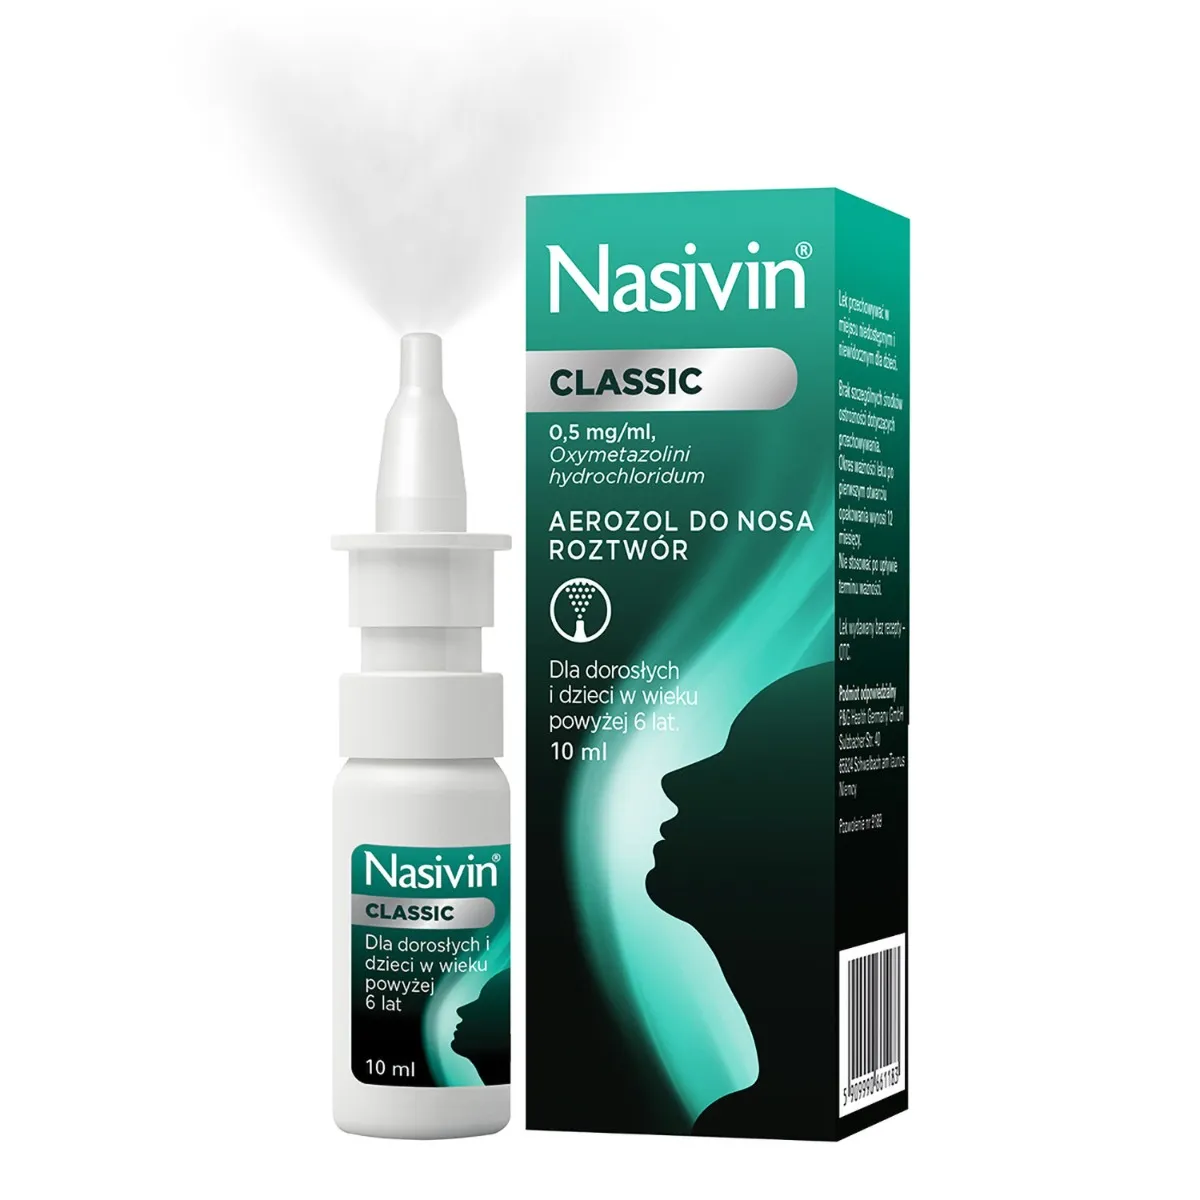 Nasivin Classic, 0,5 mg/ml, aerozol do nosa, 10 ml